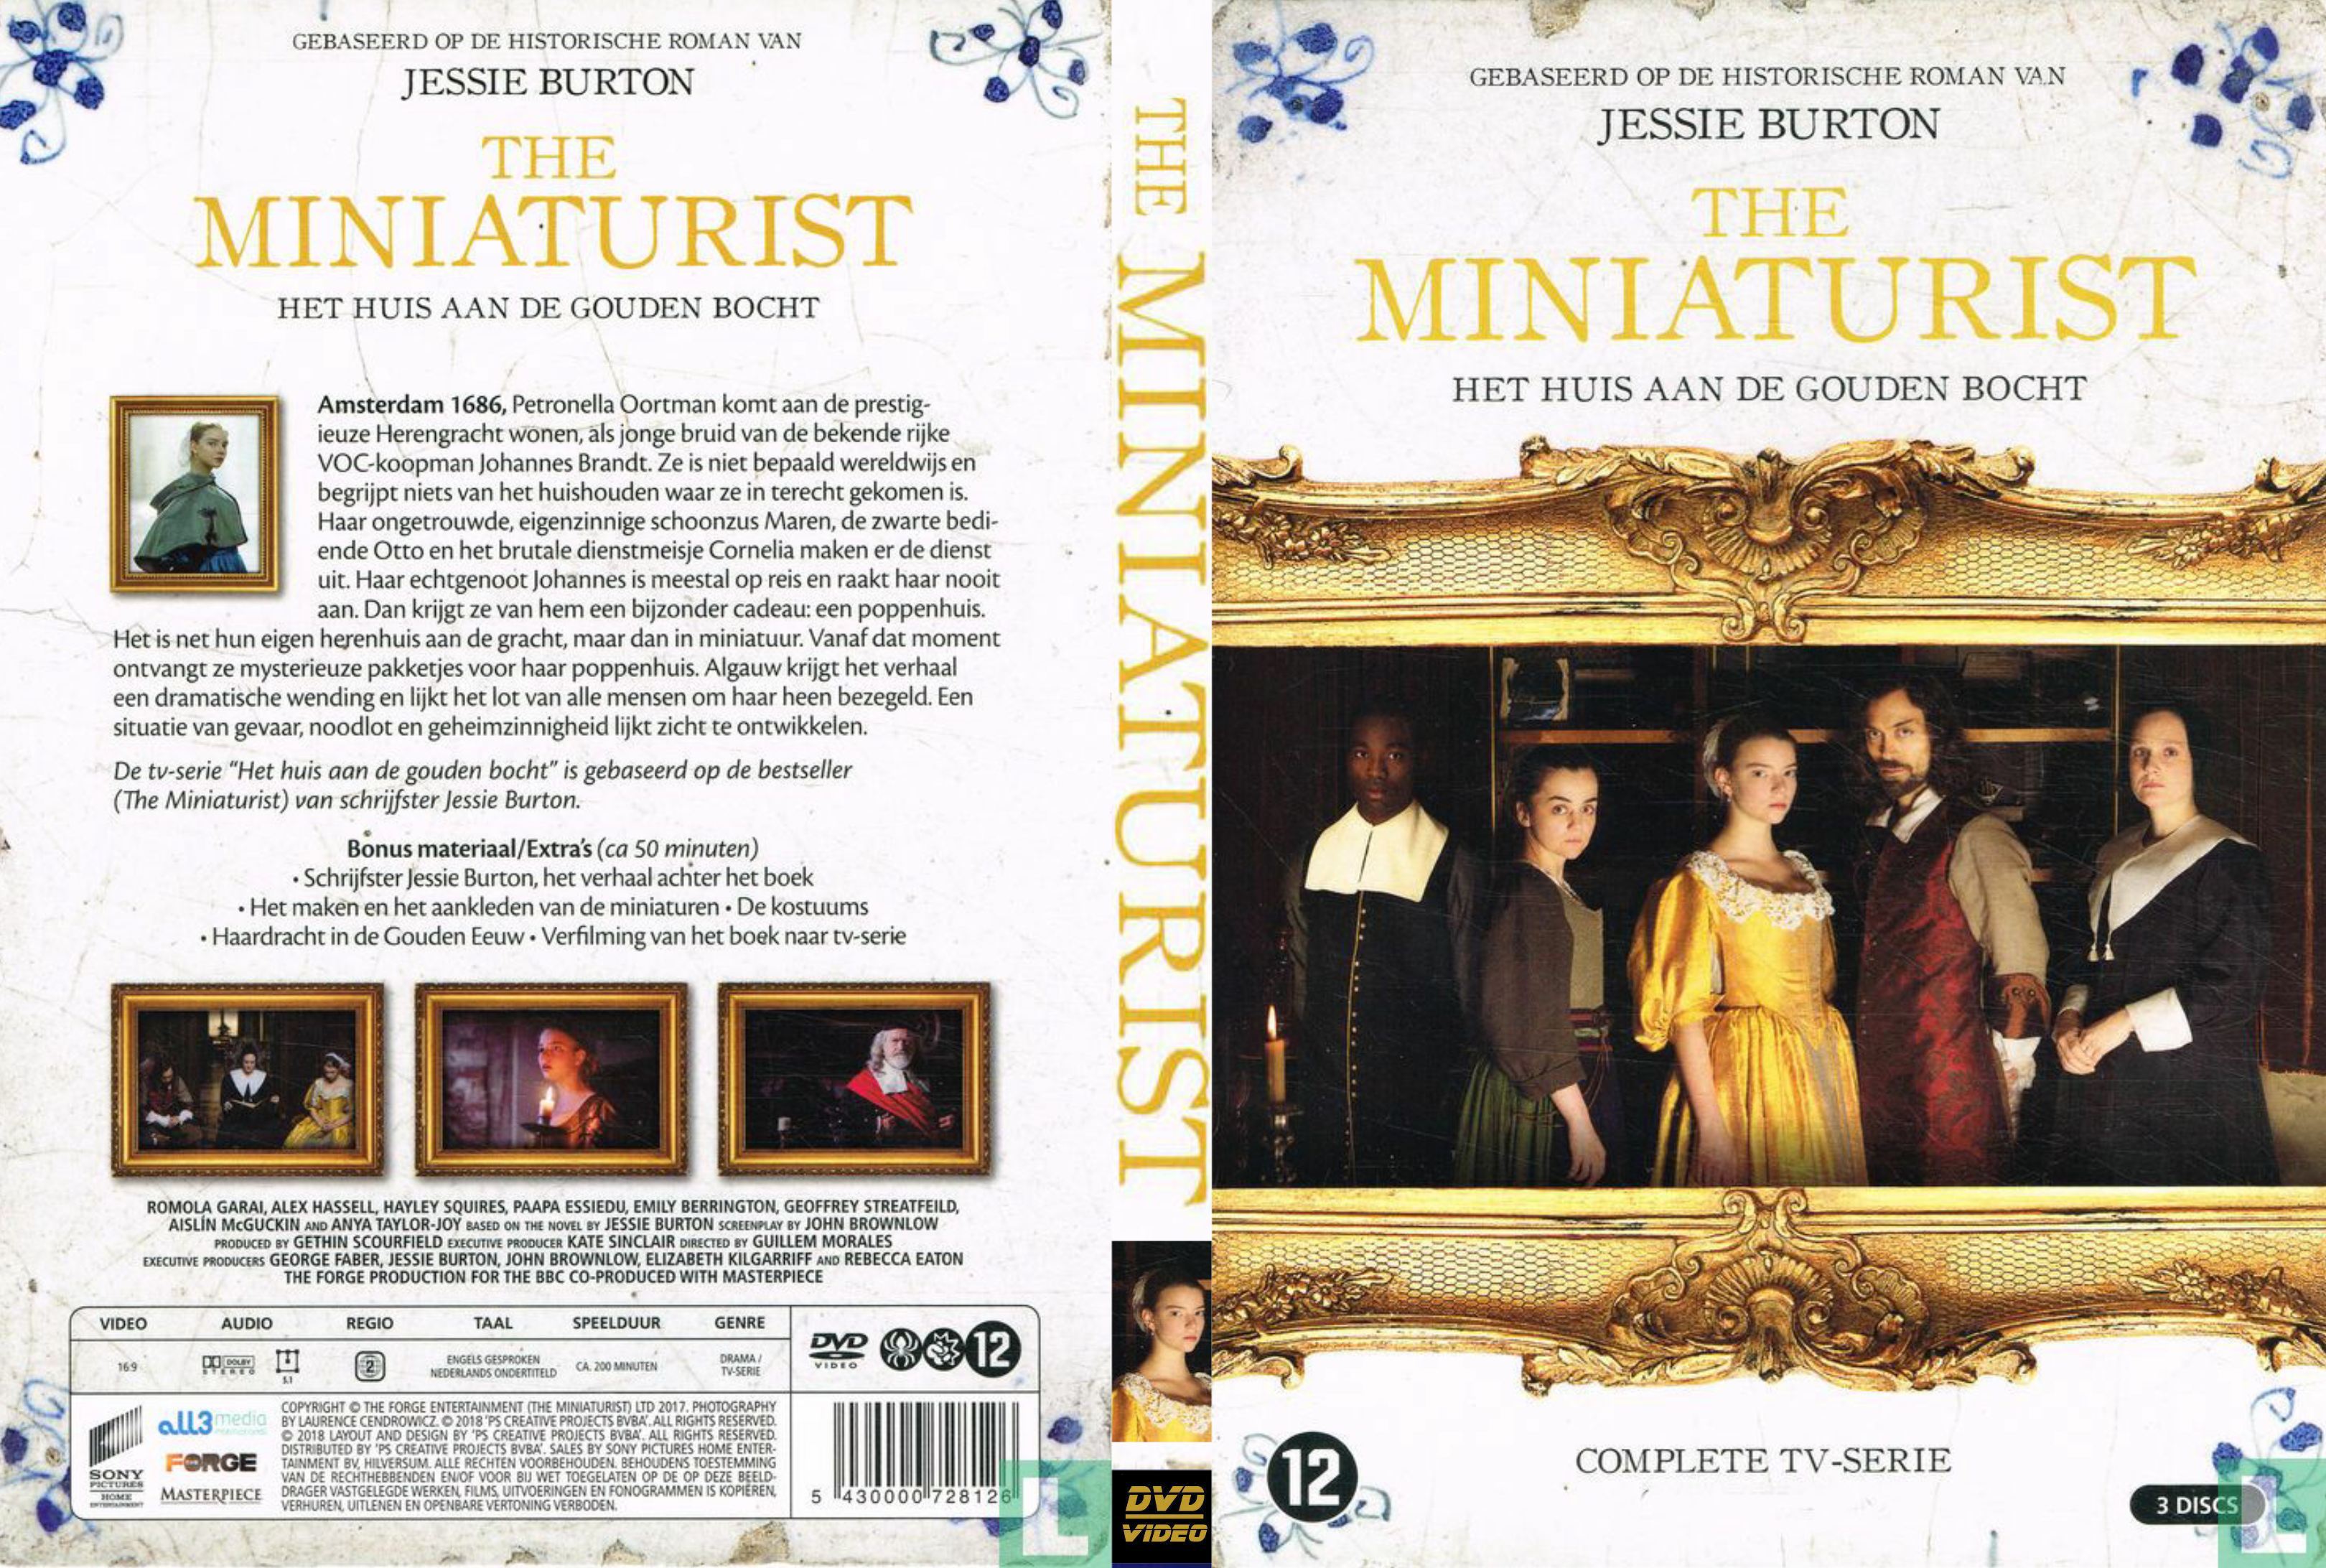 The Miniaturist (2017) Mini Serie Compleet